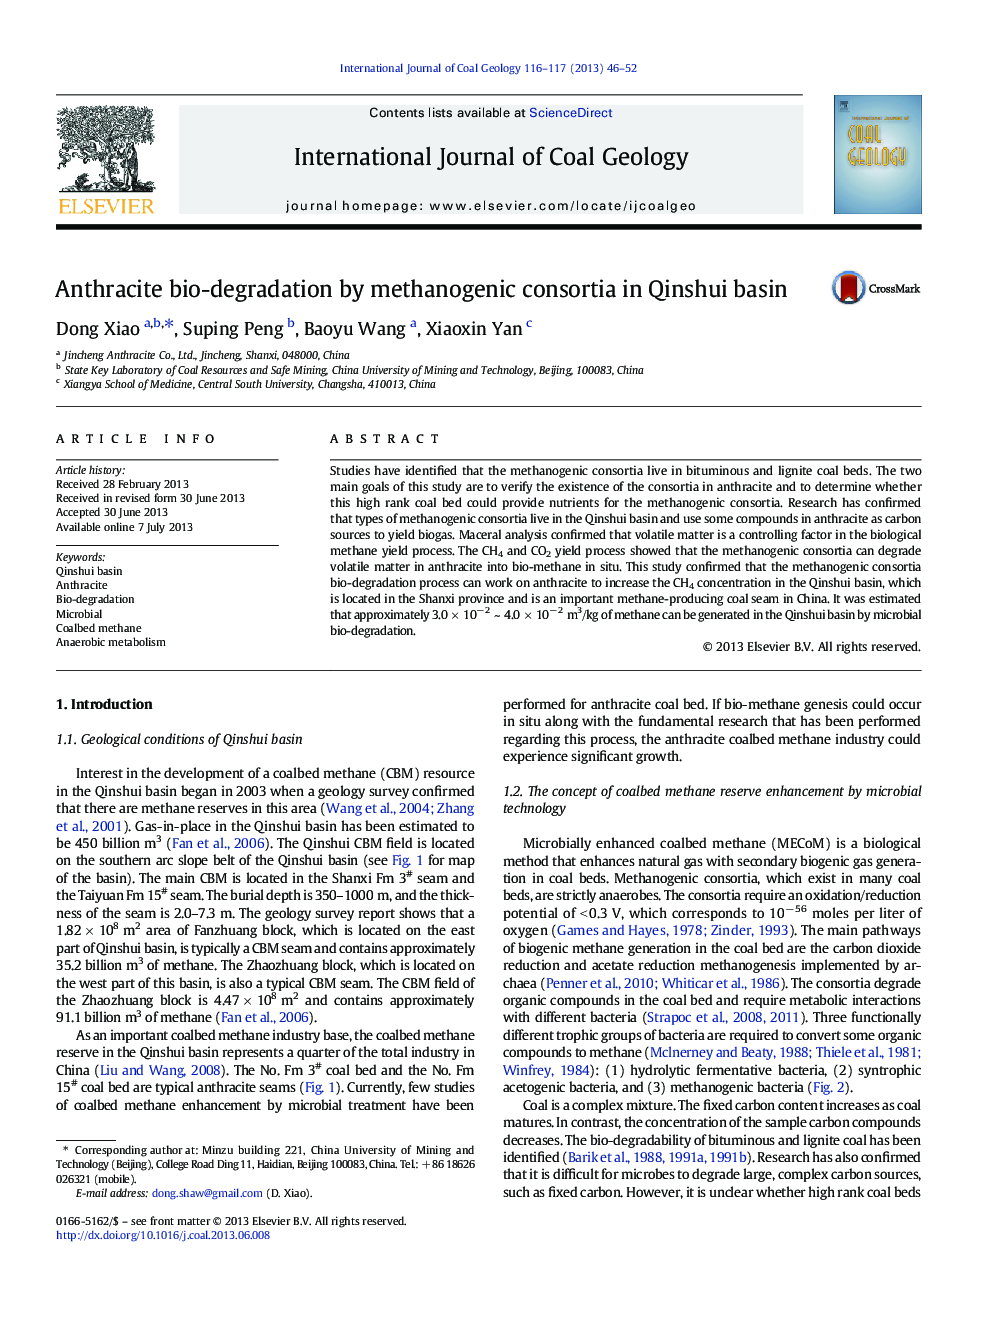 Anthracite bio-degradation by methanogenic consortia in Qinshui basin